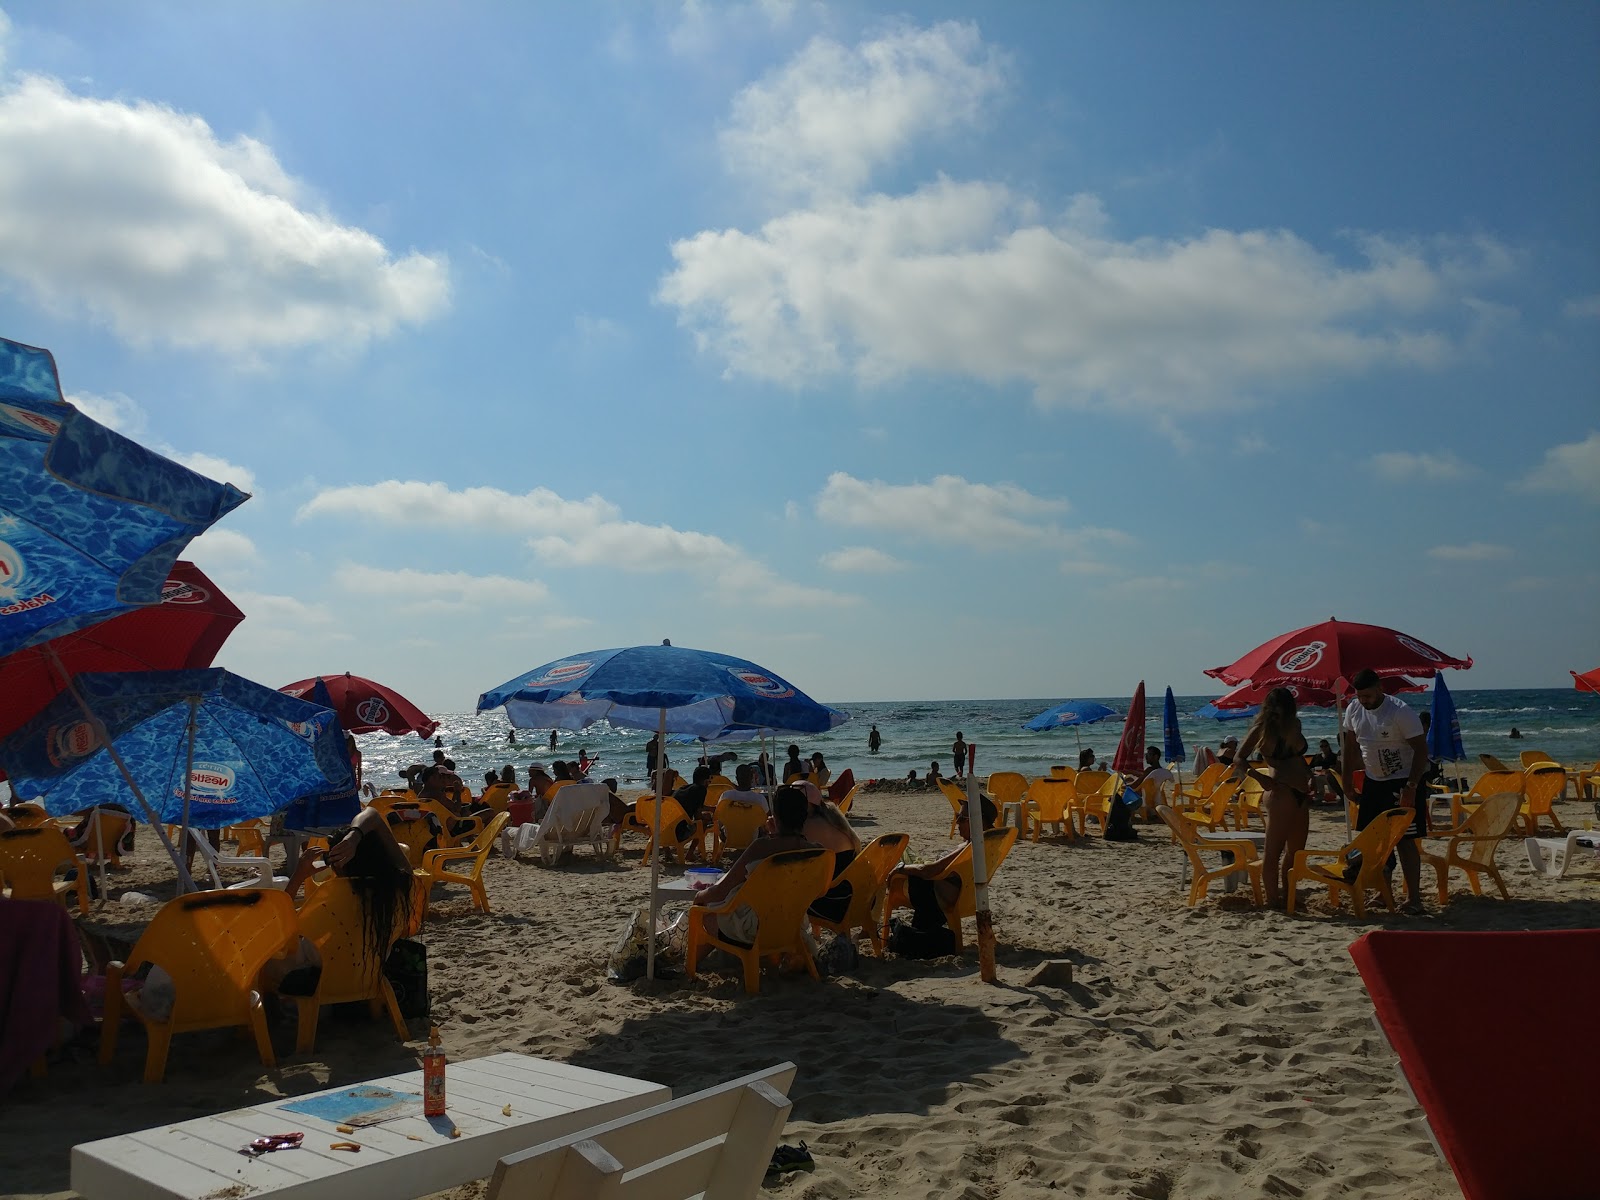 Foto de Tel Gerrit beach - lugar popular entre os apreciadores de relaxamento